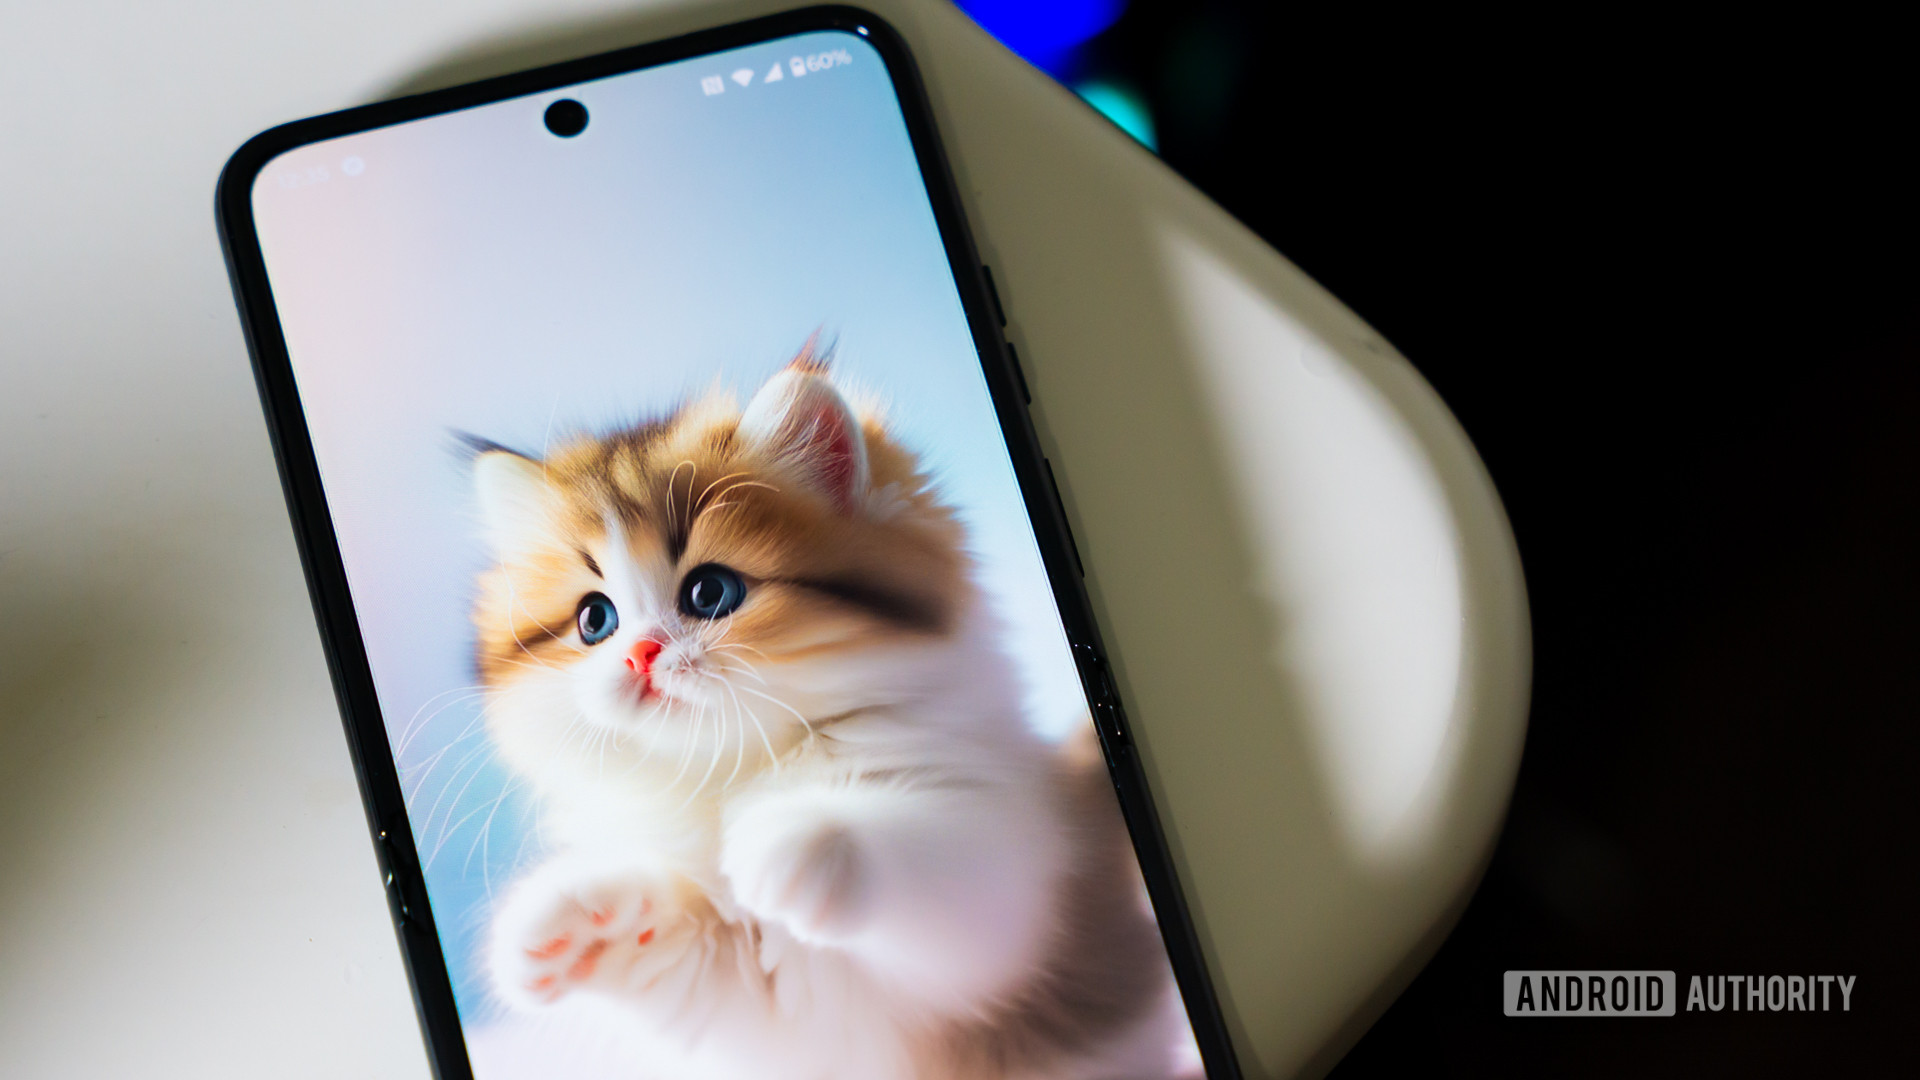 Phone showing cute wallpaper of cat